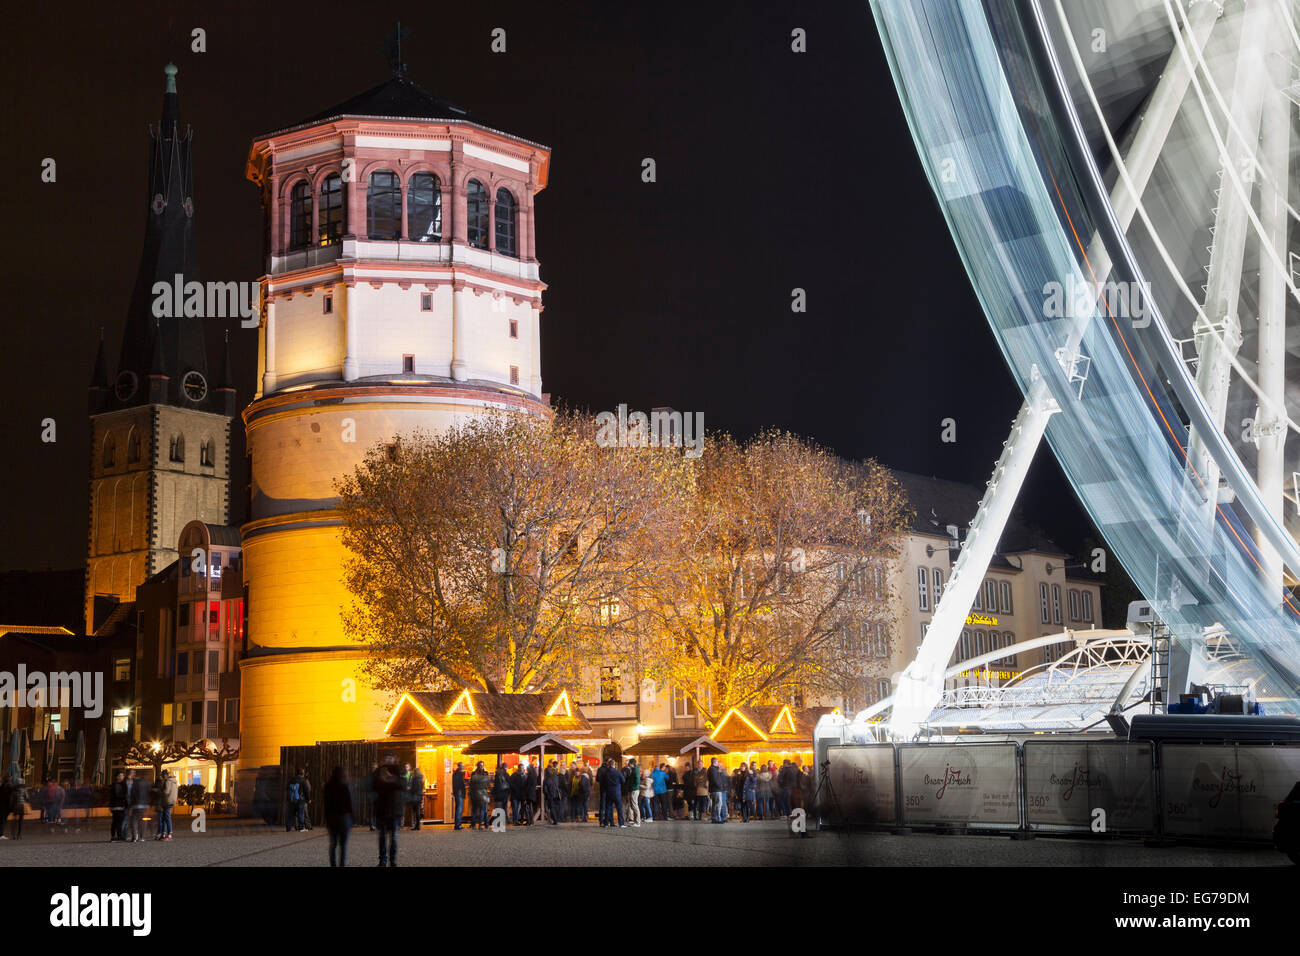 Germany, Duesseldorf, Burgplatz with Lambertus Basilica, donjon and ferris wheel at night Stock Photo